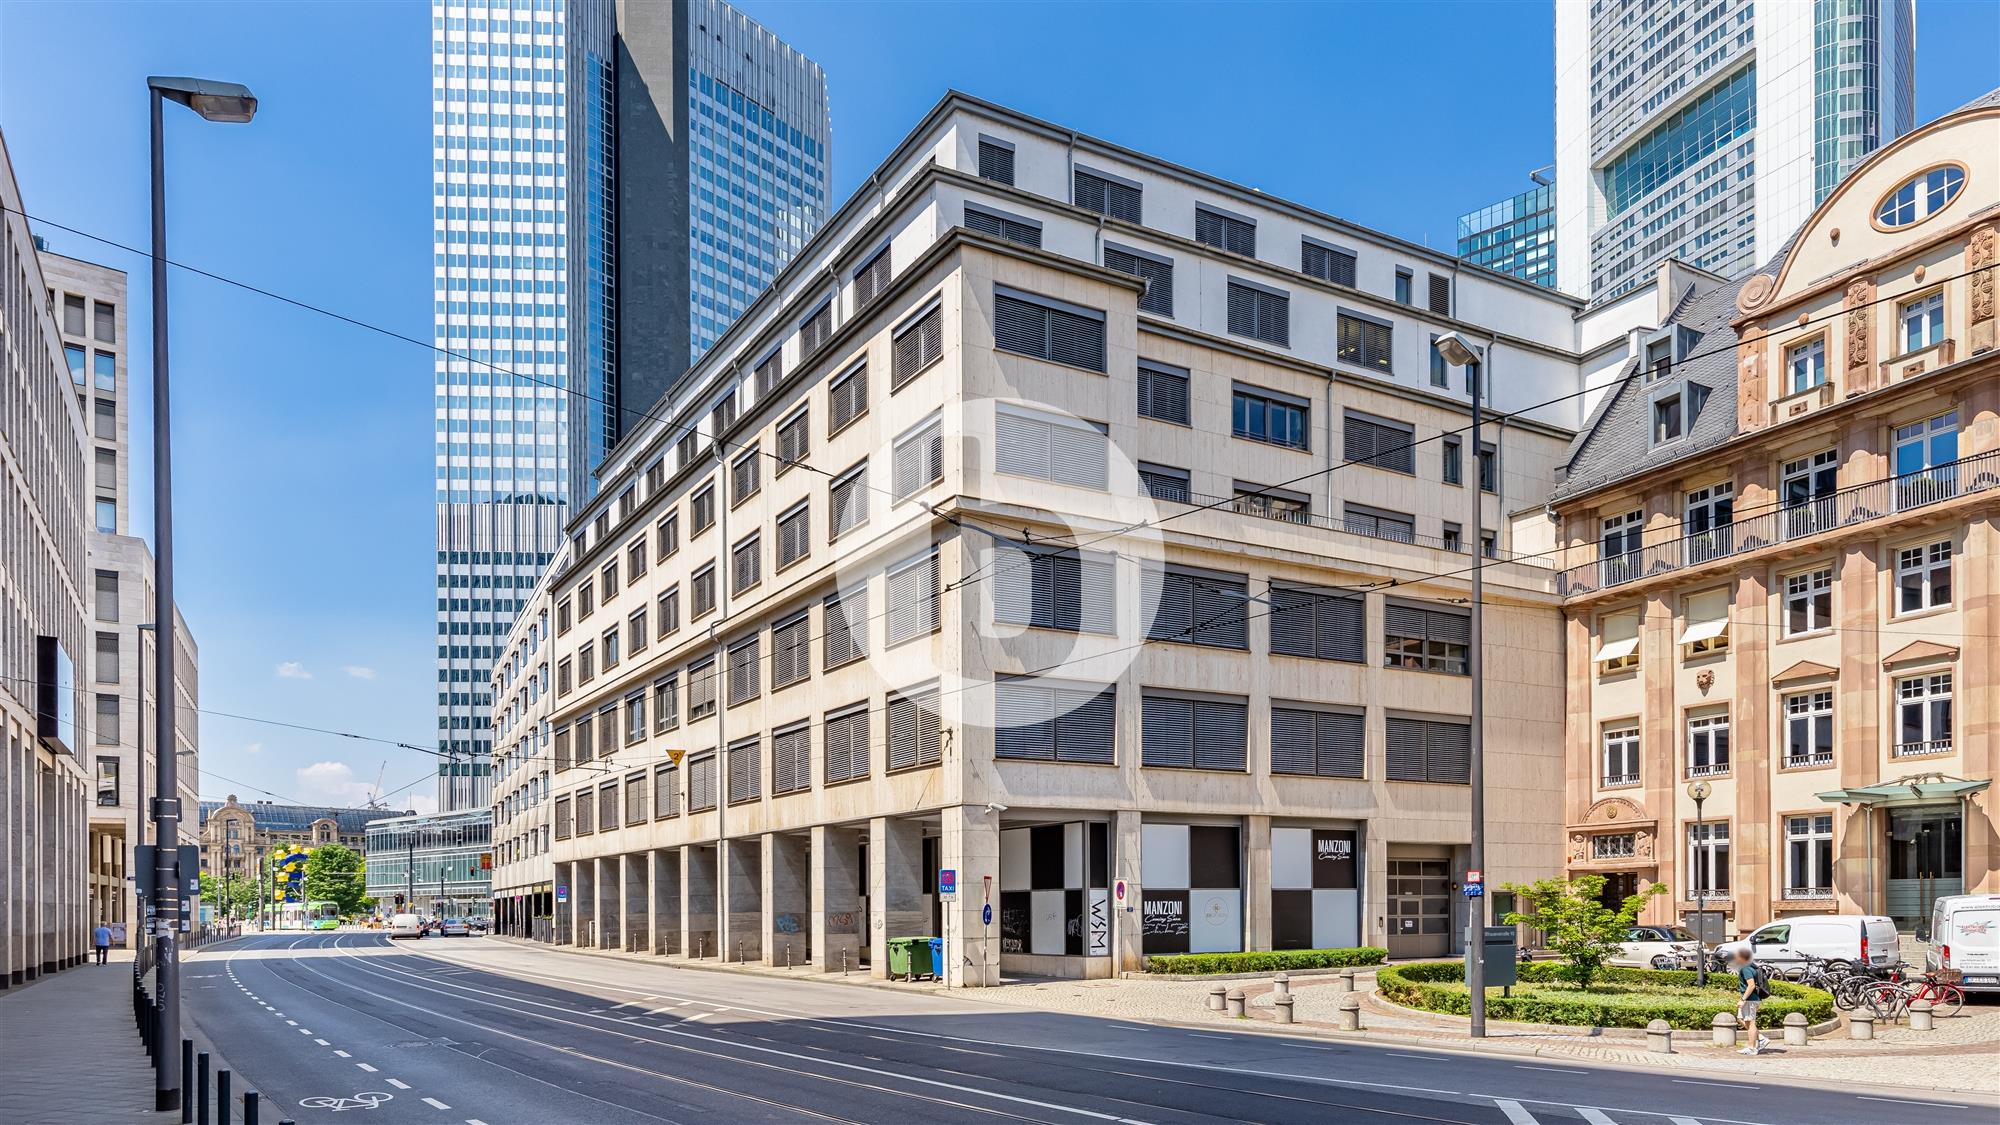 Bürogebäude zur Miete Provisionsfrei 18,50 € 1.060 m² Bürofläche teilbar ab 226 m² Altstadt Frankfurt am Main 60311